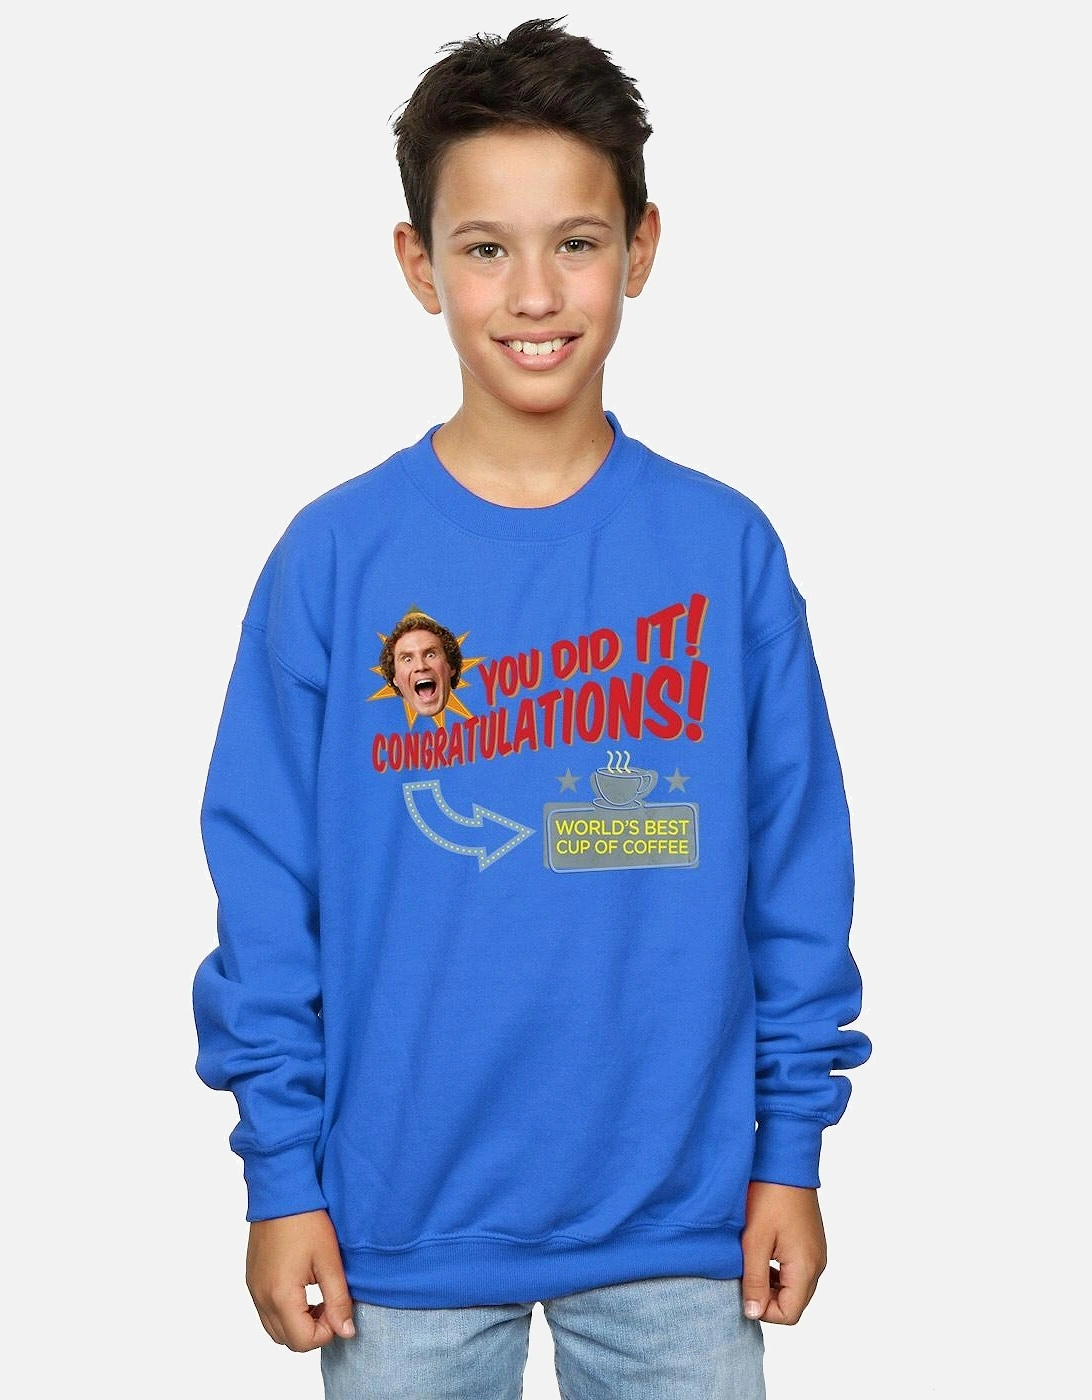 Boys World?'s Best Coffee Sweatshirt